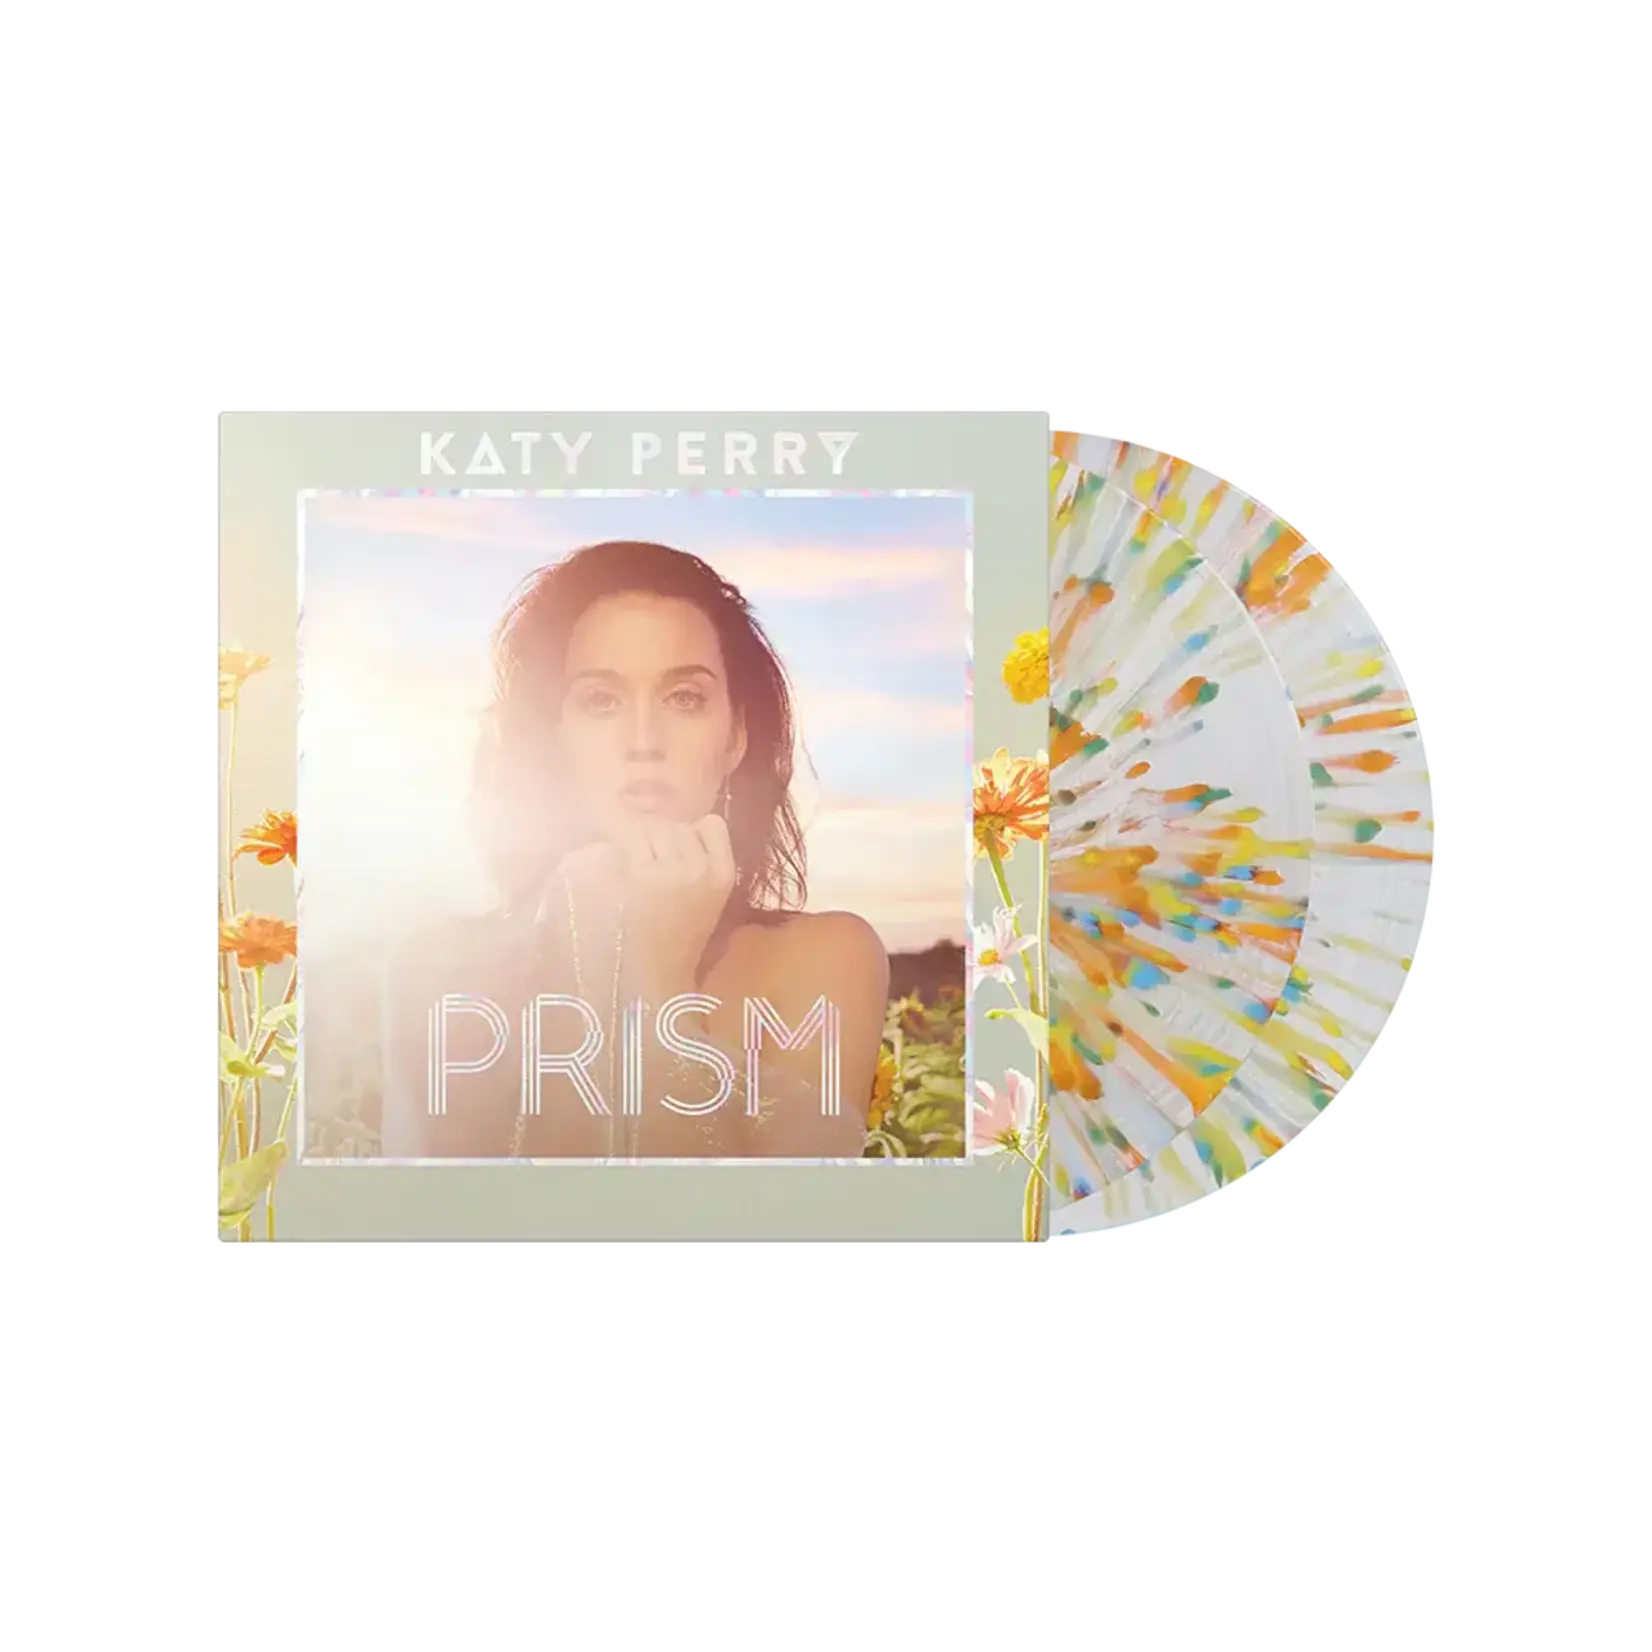 [New] Perry, Katy: Prism (2LP, 10th Anniversary, prismatic splatter vinyl w/bonus track) [CAPITOL]